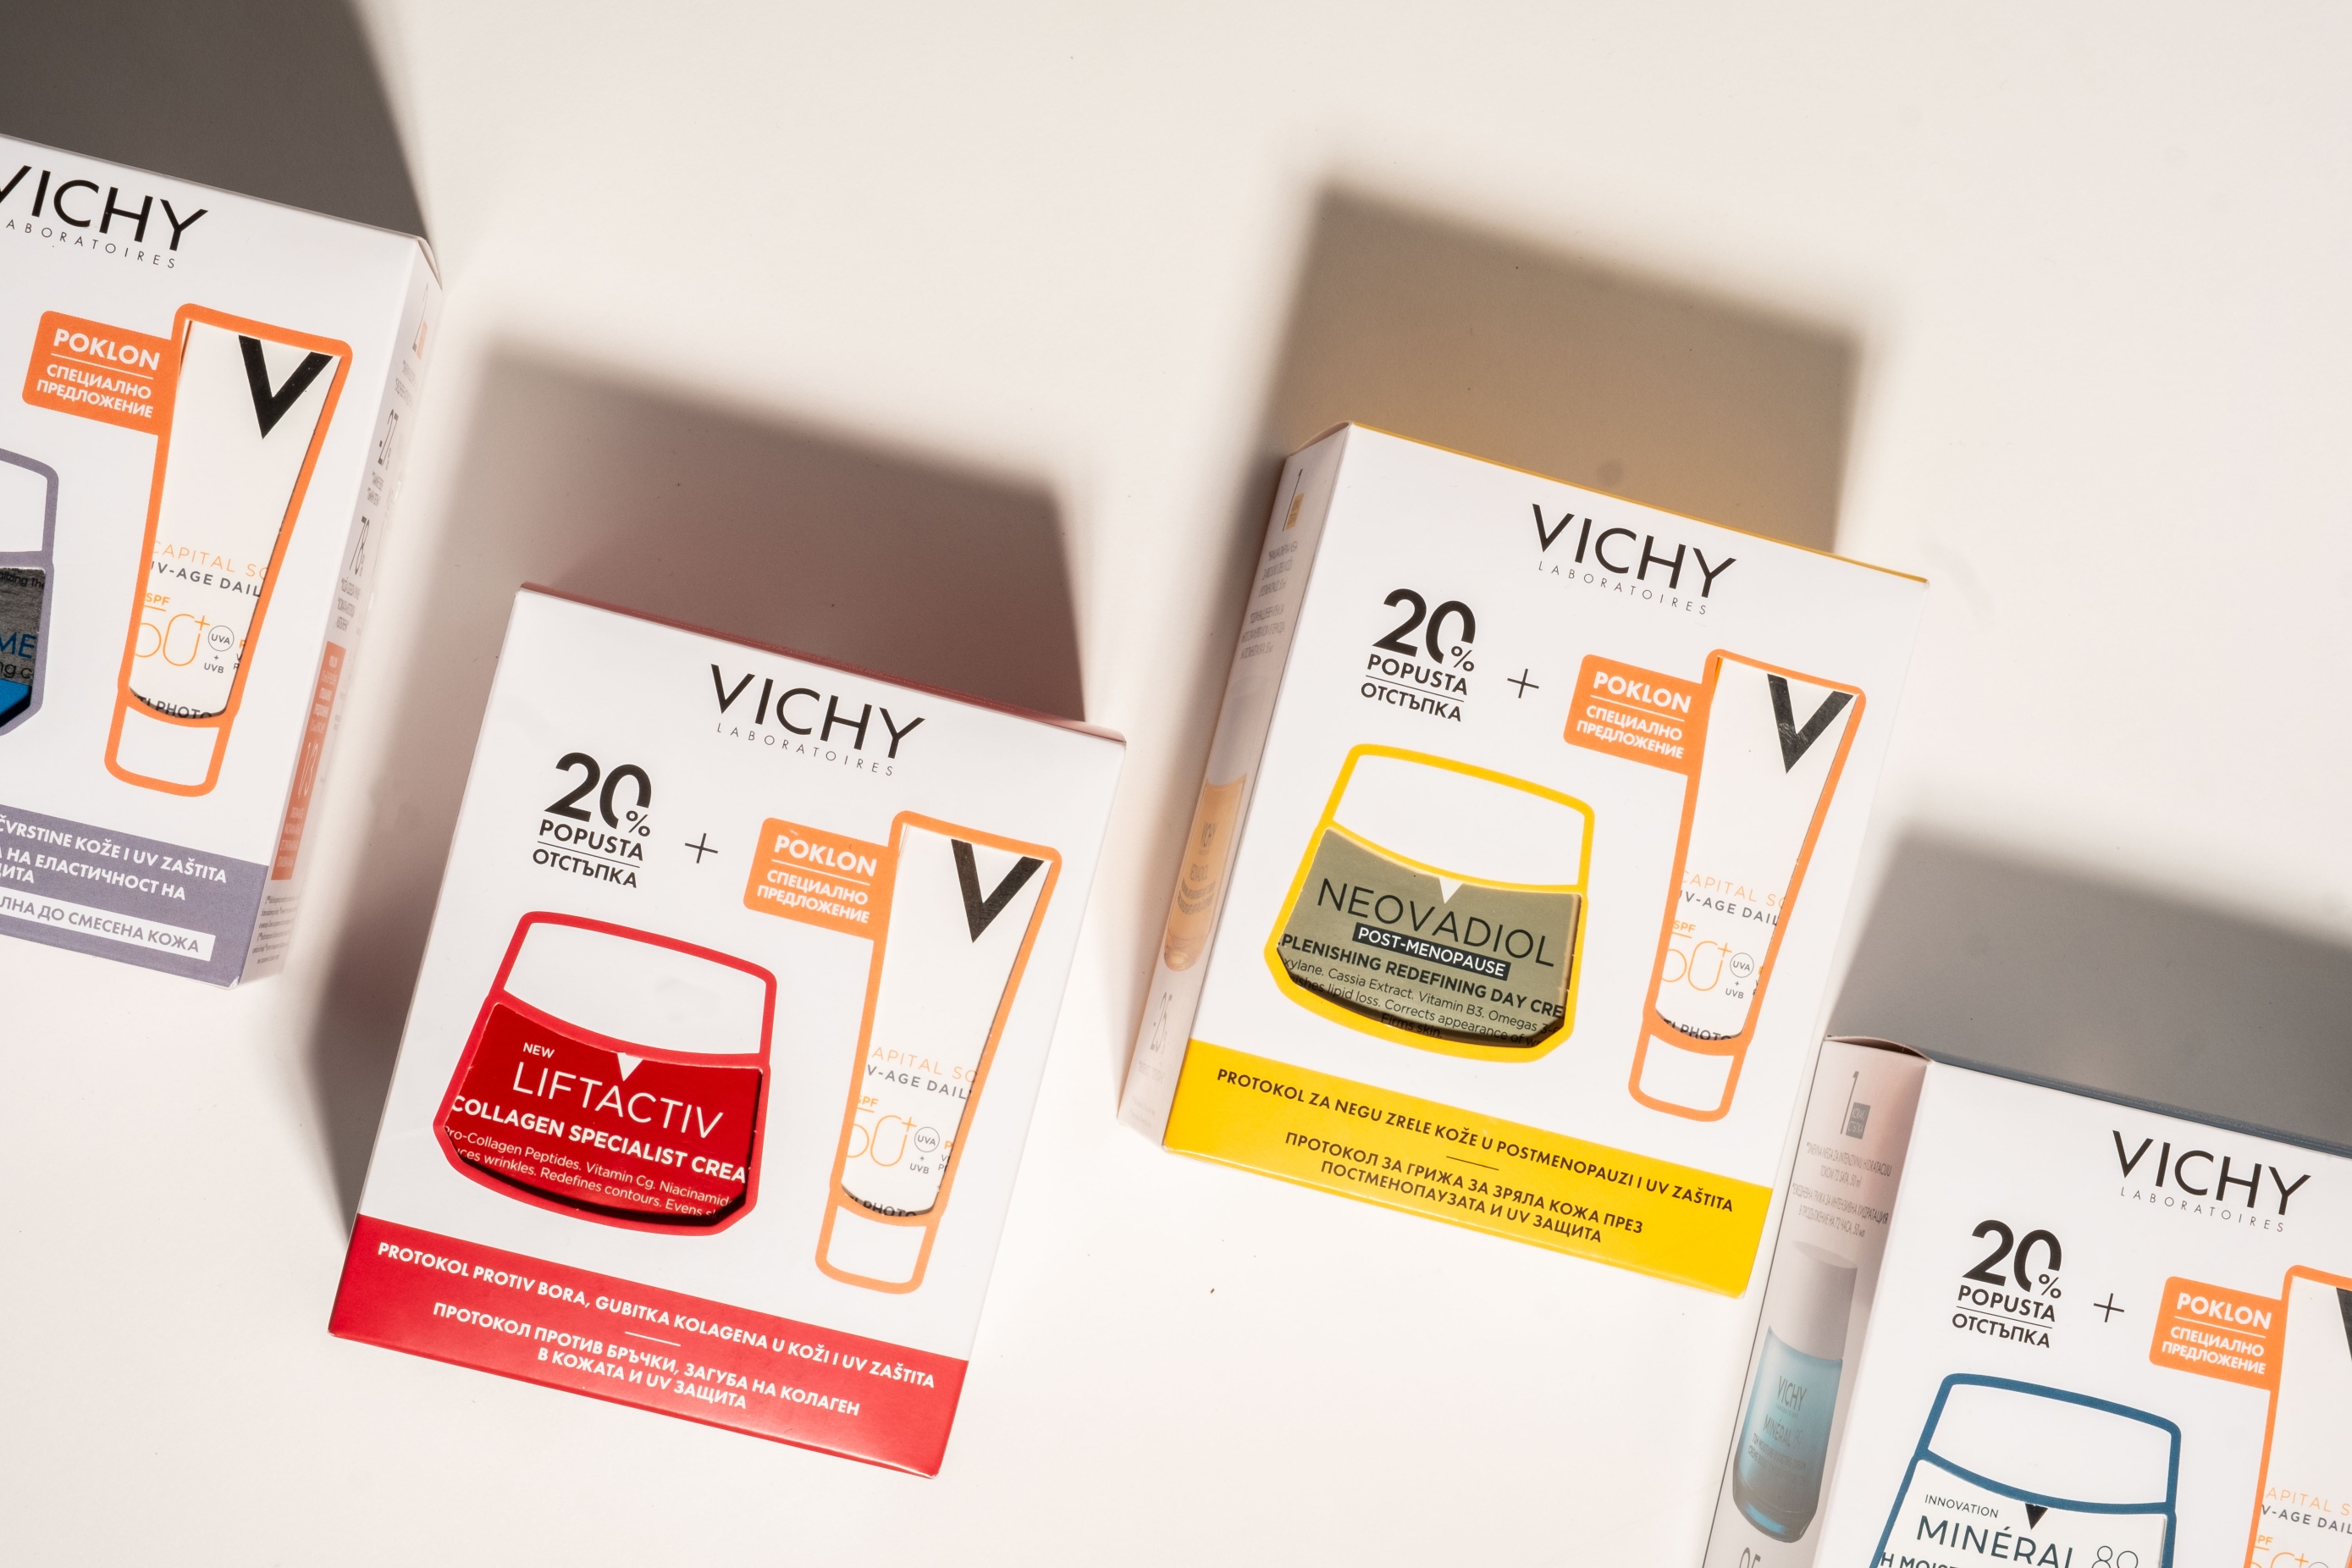 Vichy: Ove praznične sezone, negovana koža je najdragoceniji poklon